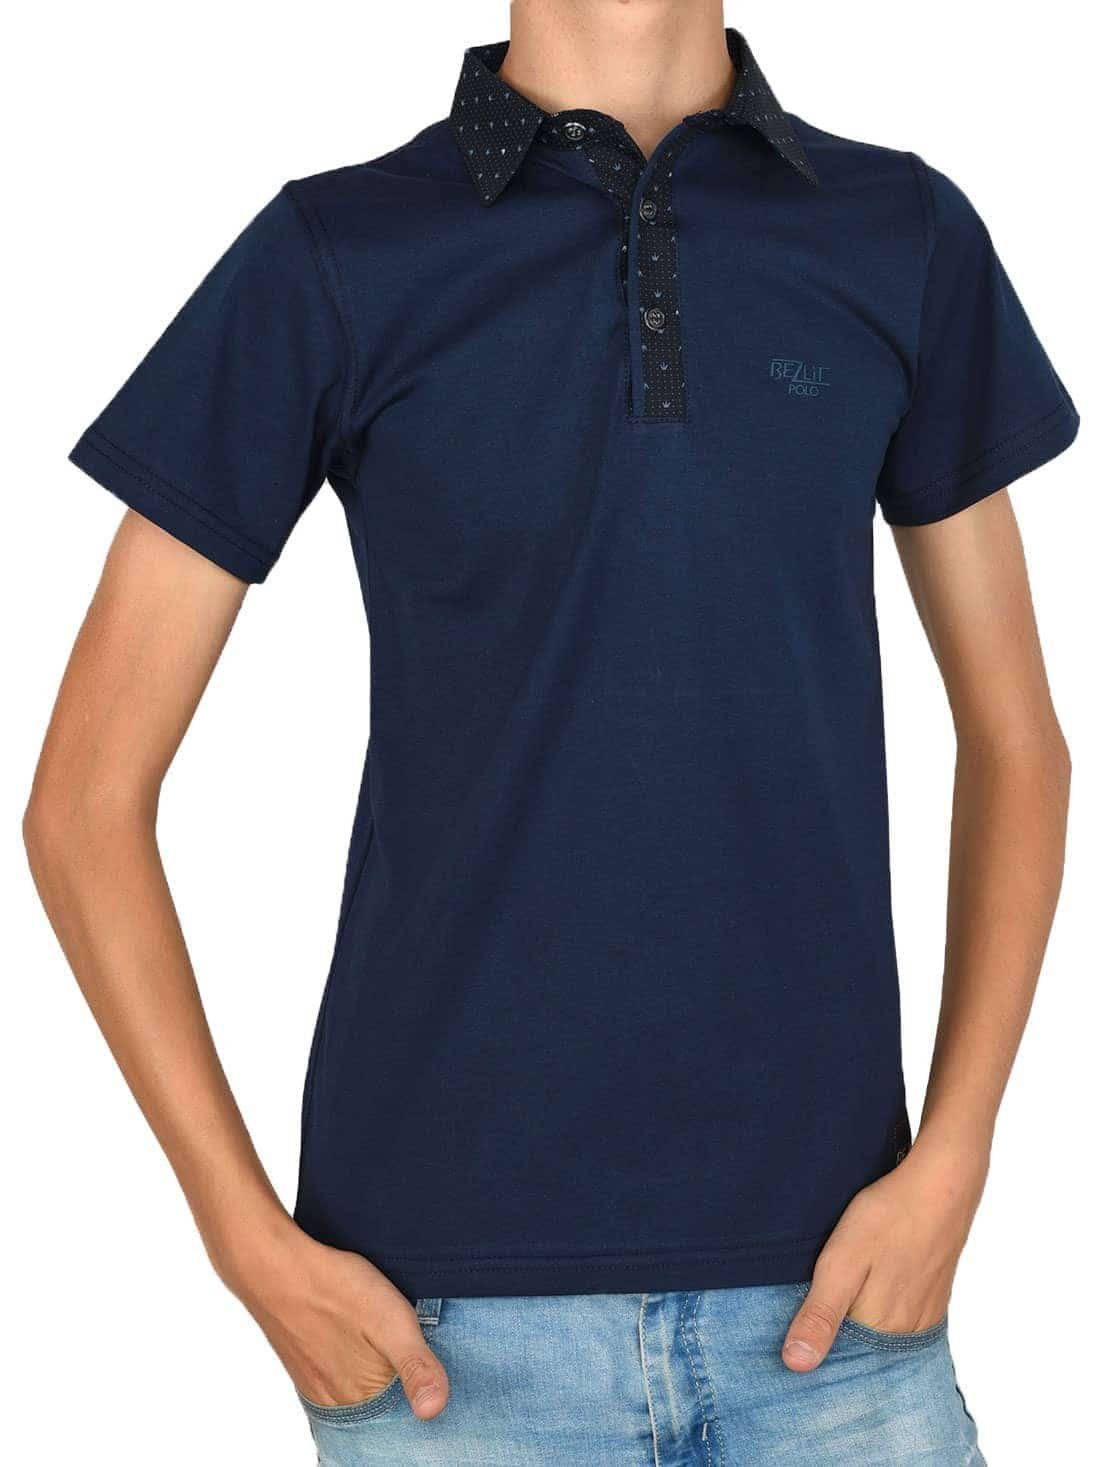 BEZLIT Kurzarmshirt Jungen Polo Shirt mit Kontrastfarben (1-tlg) Casual Navy